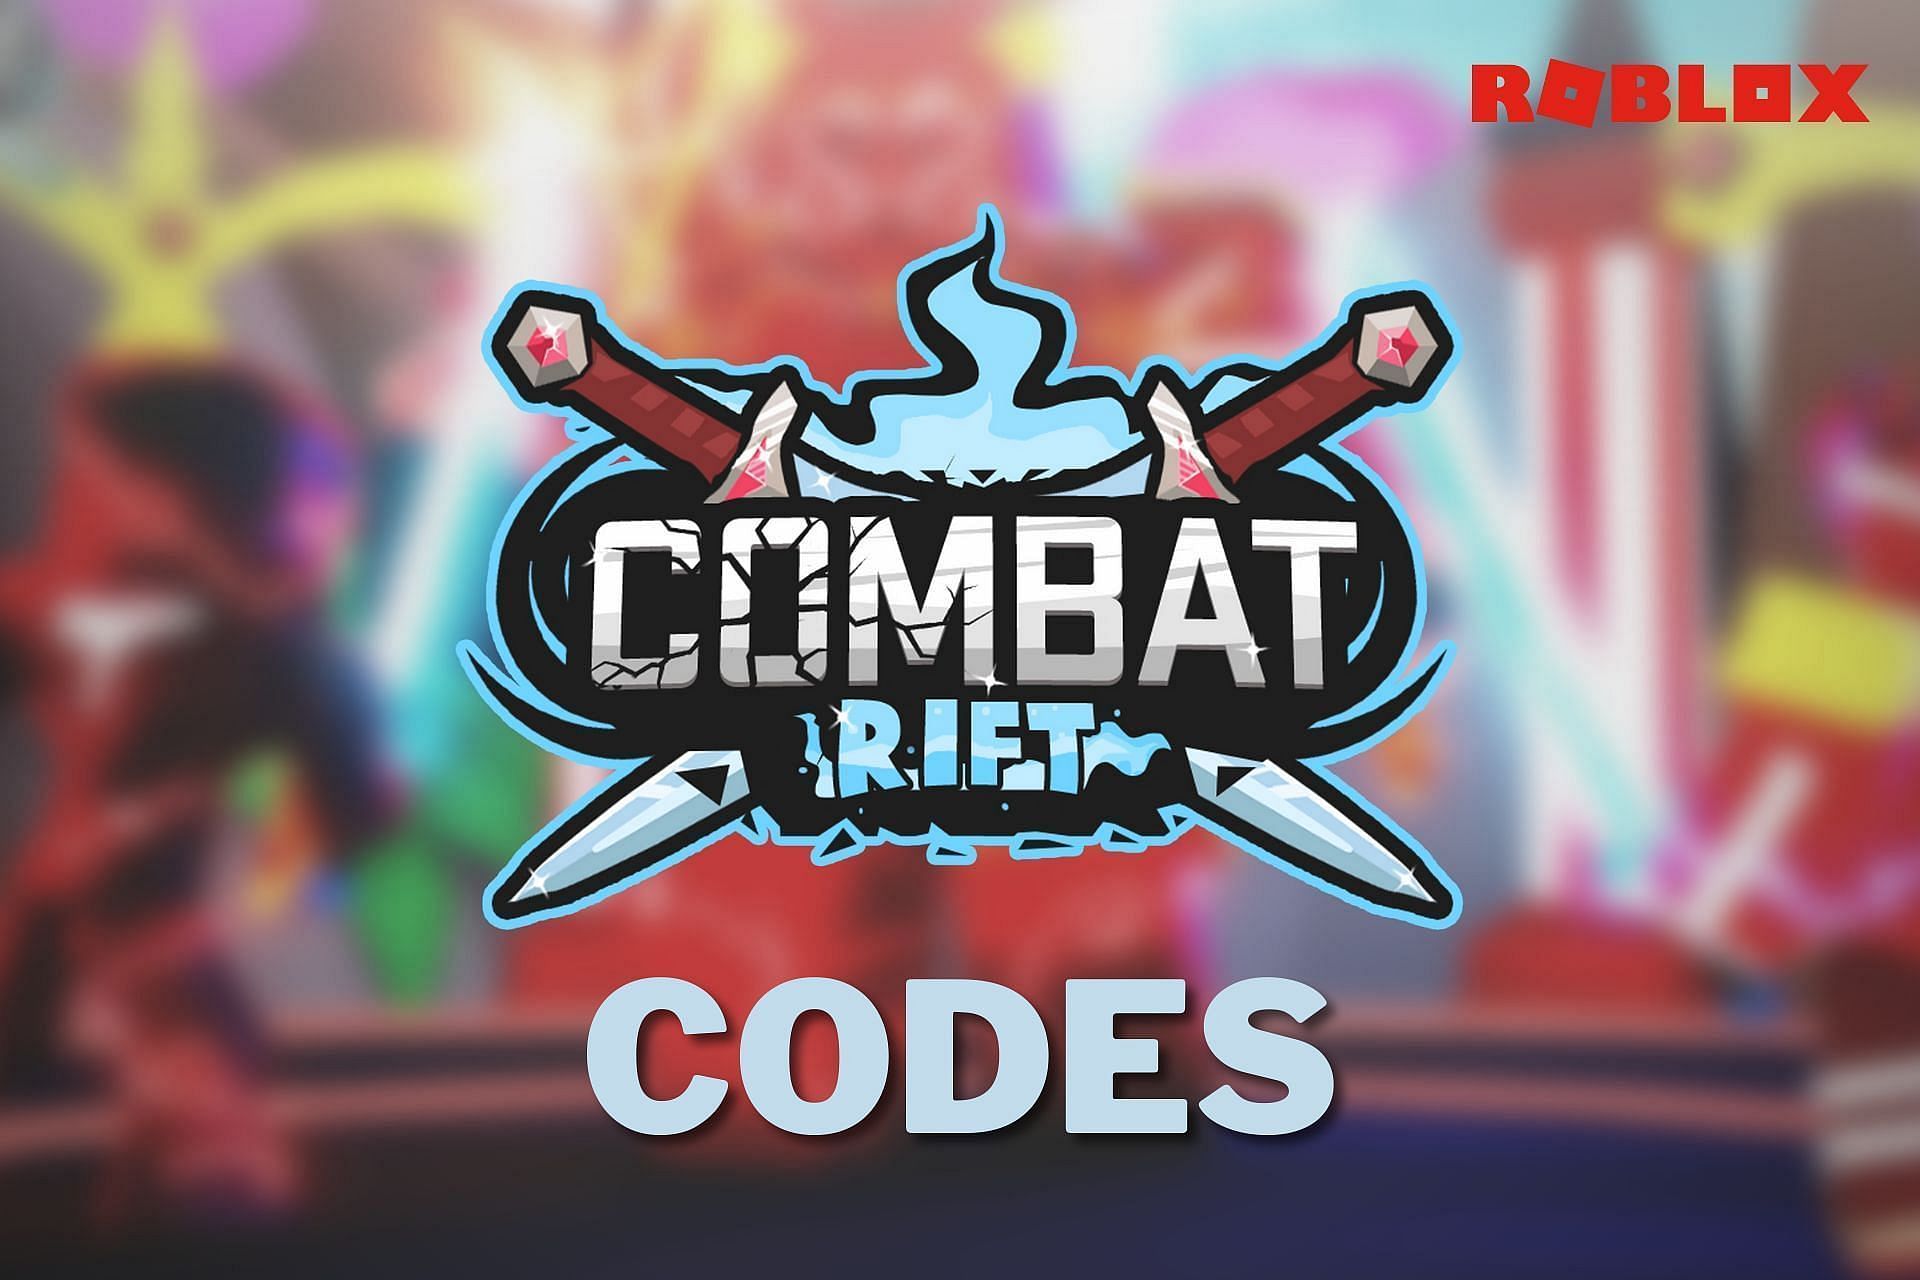 Roblox Cog Simulator code for February 2023: Free Gems